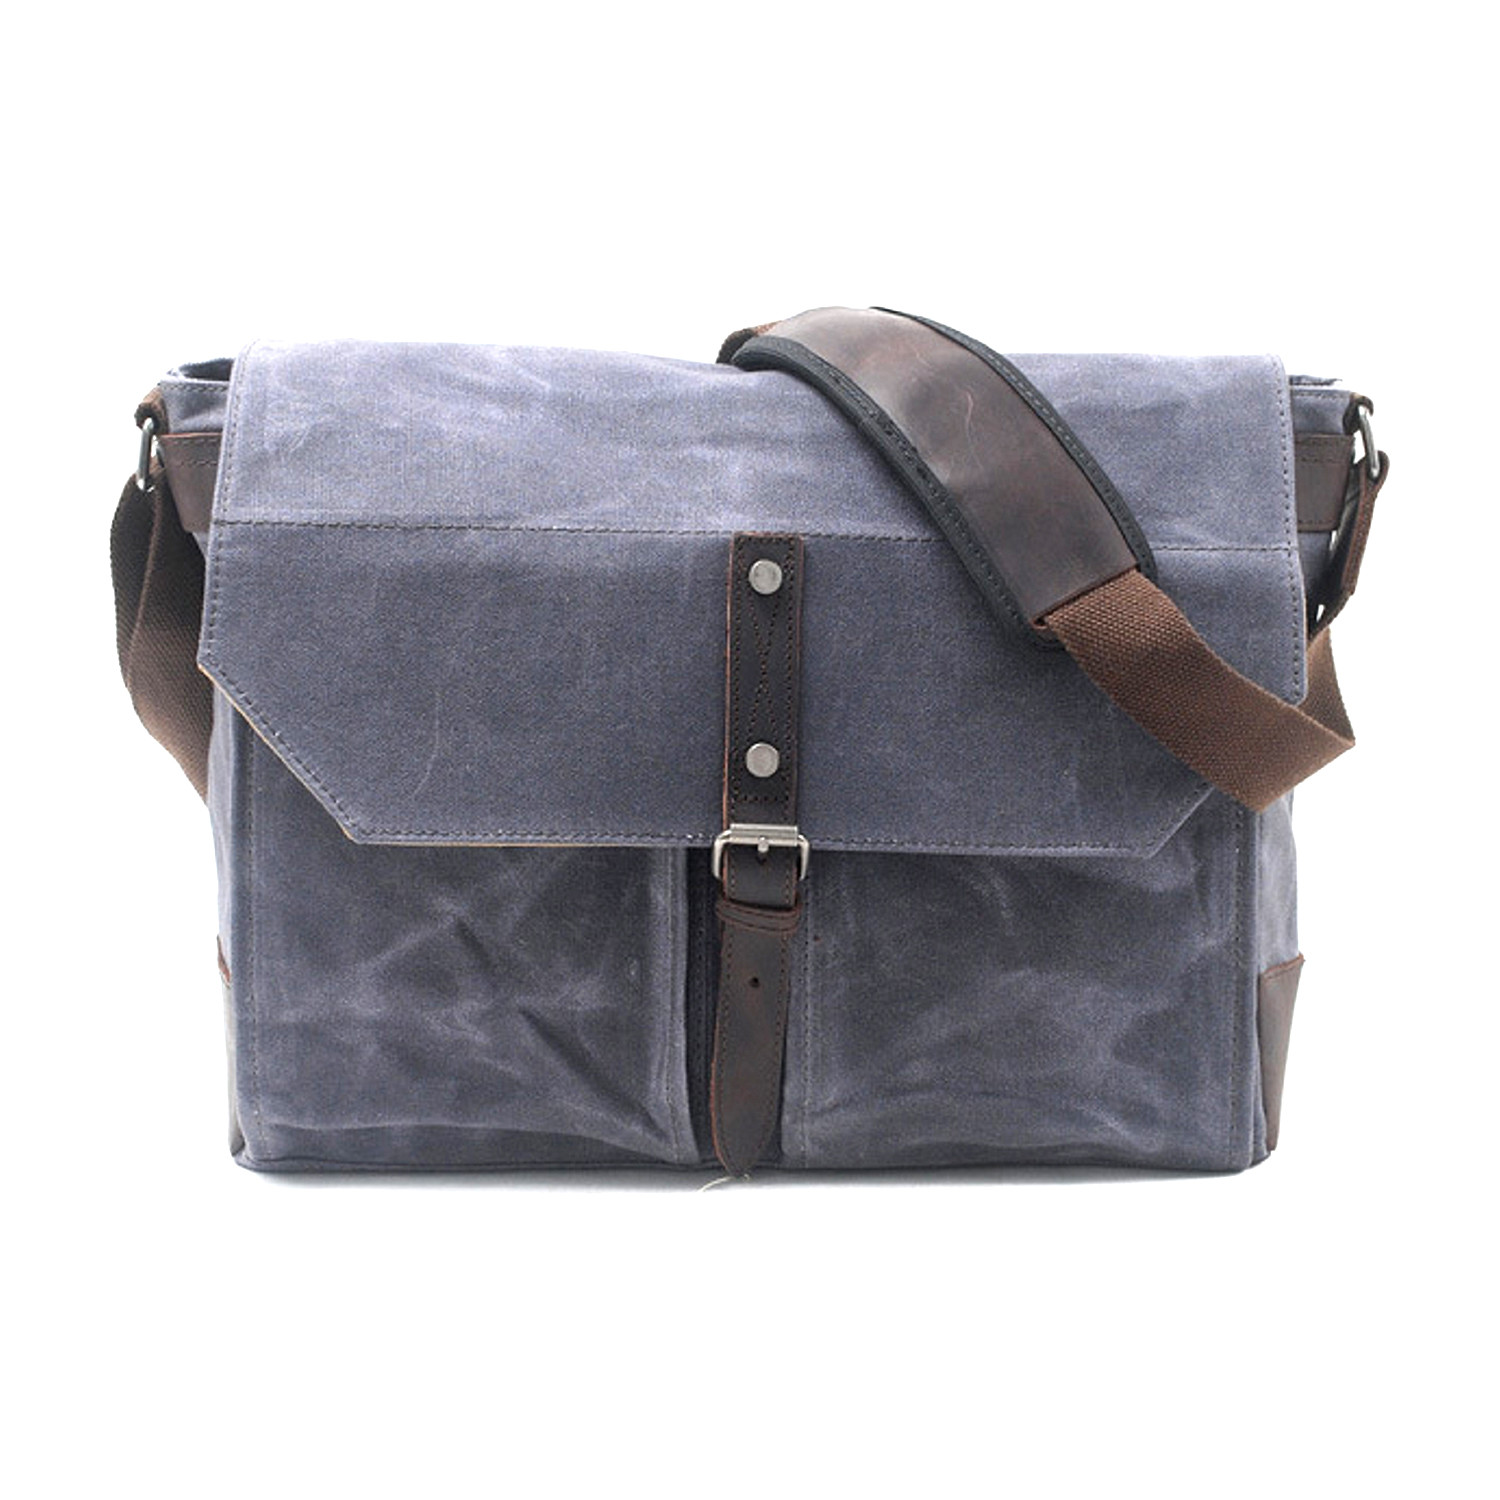 No. 755 Canvas Messenger Bag (Black) - OwnBag - Touch of Modern